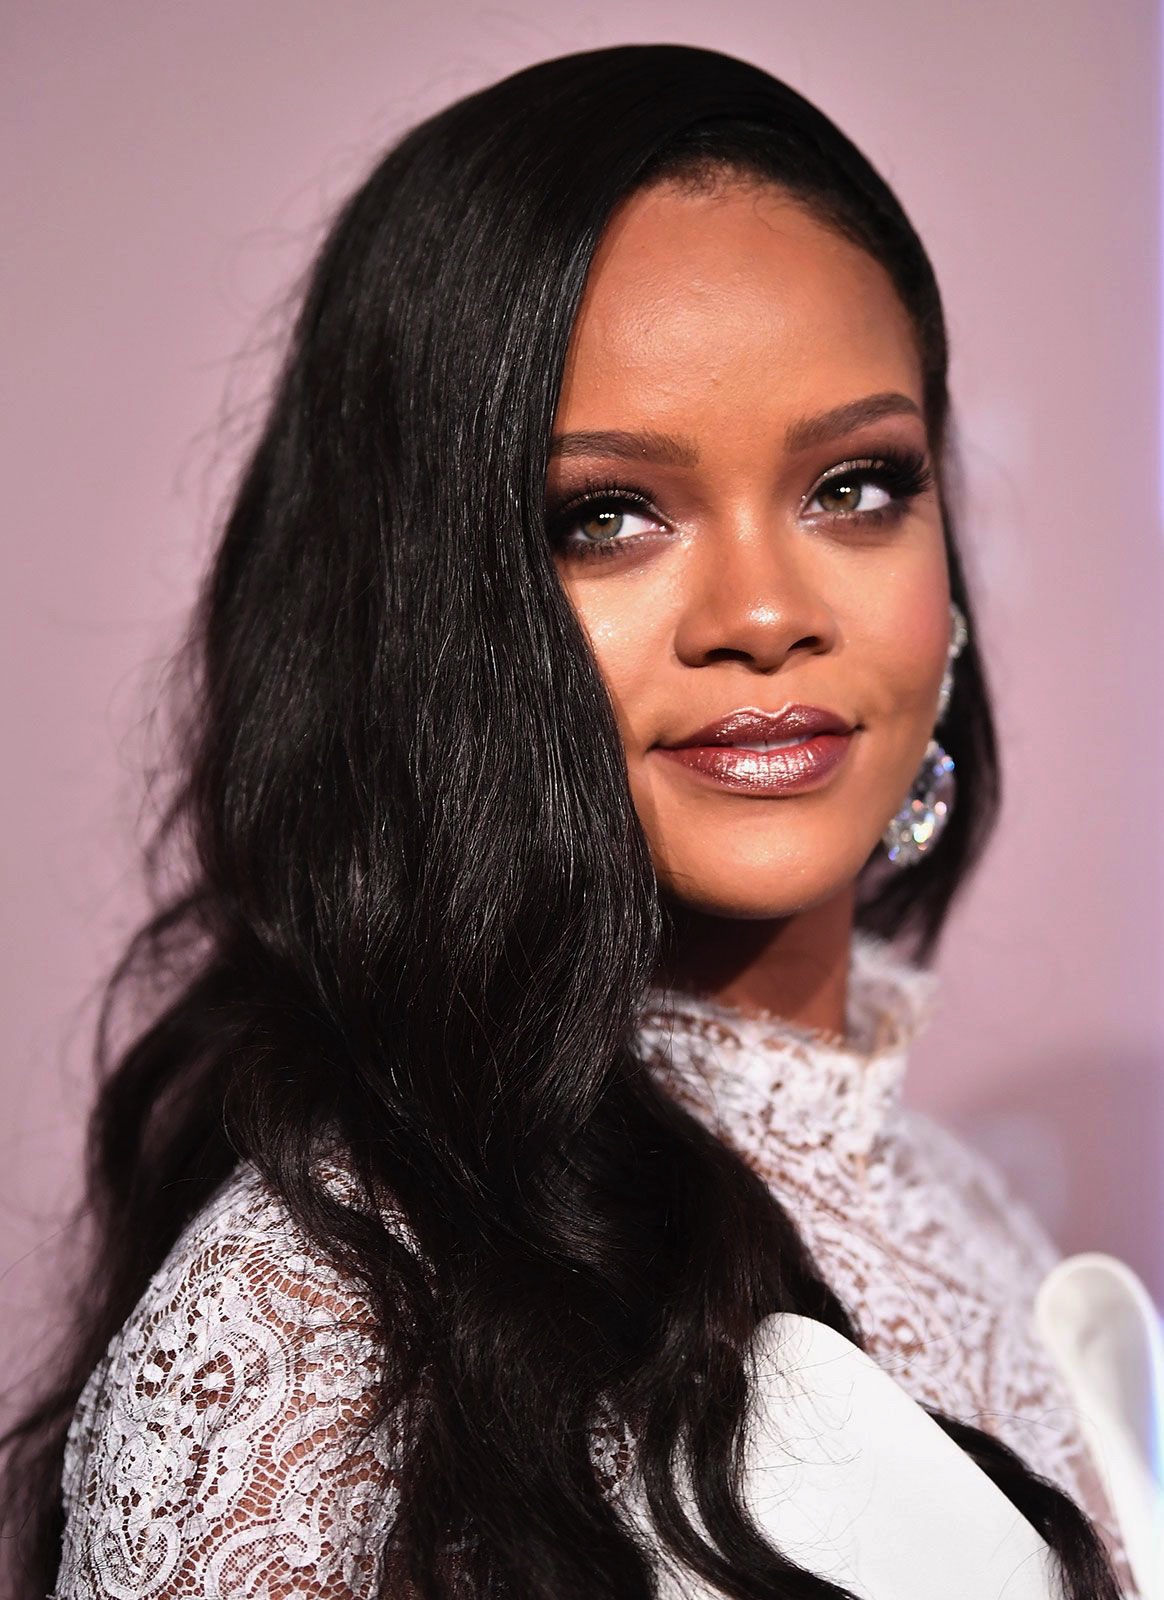 LVMH, Rihanna to pause Fenty fashion venture, focus on cosmetics